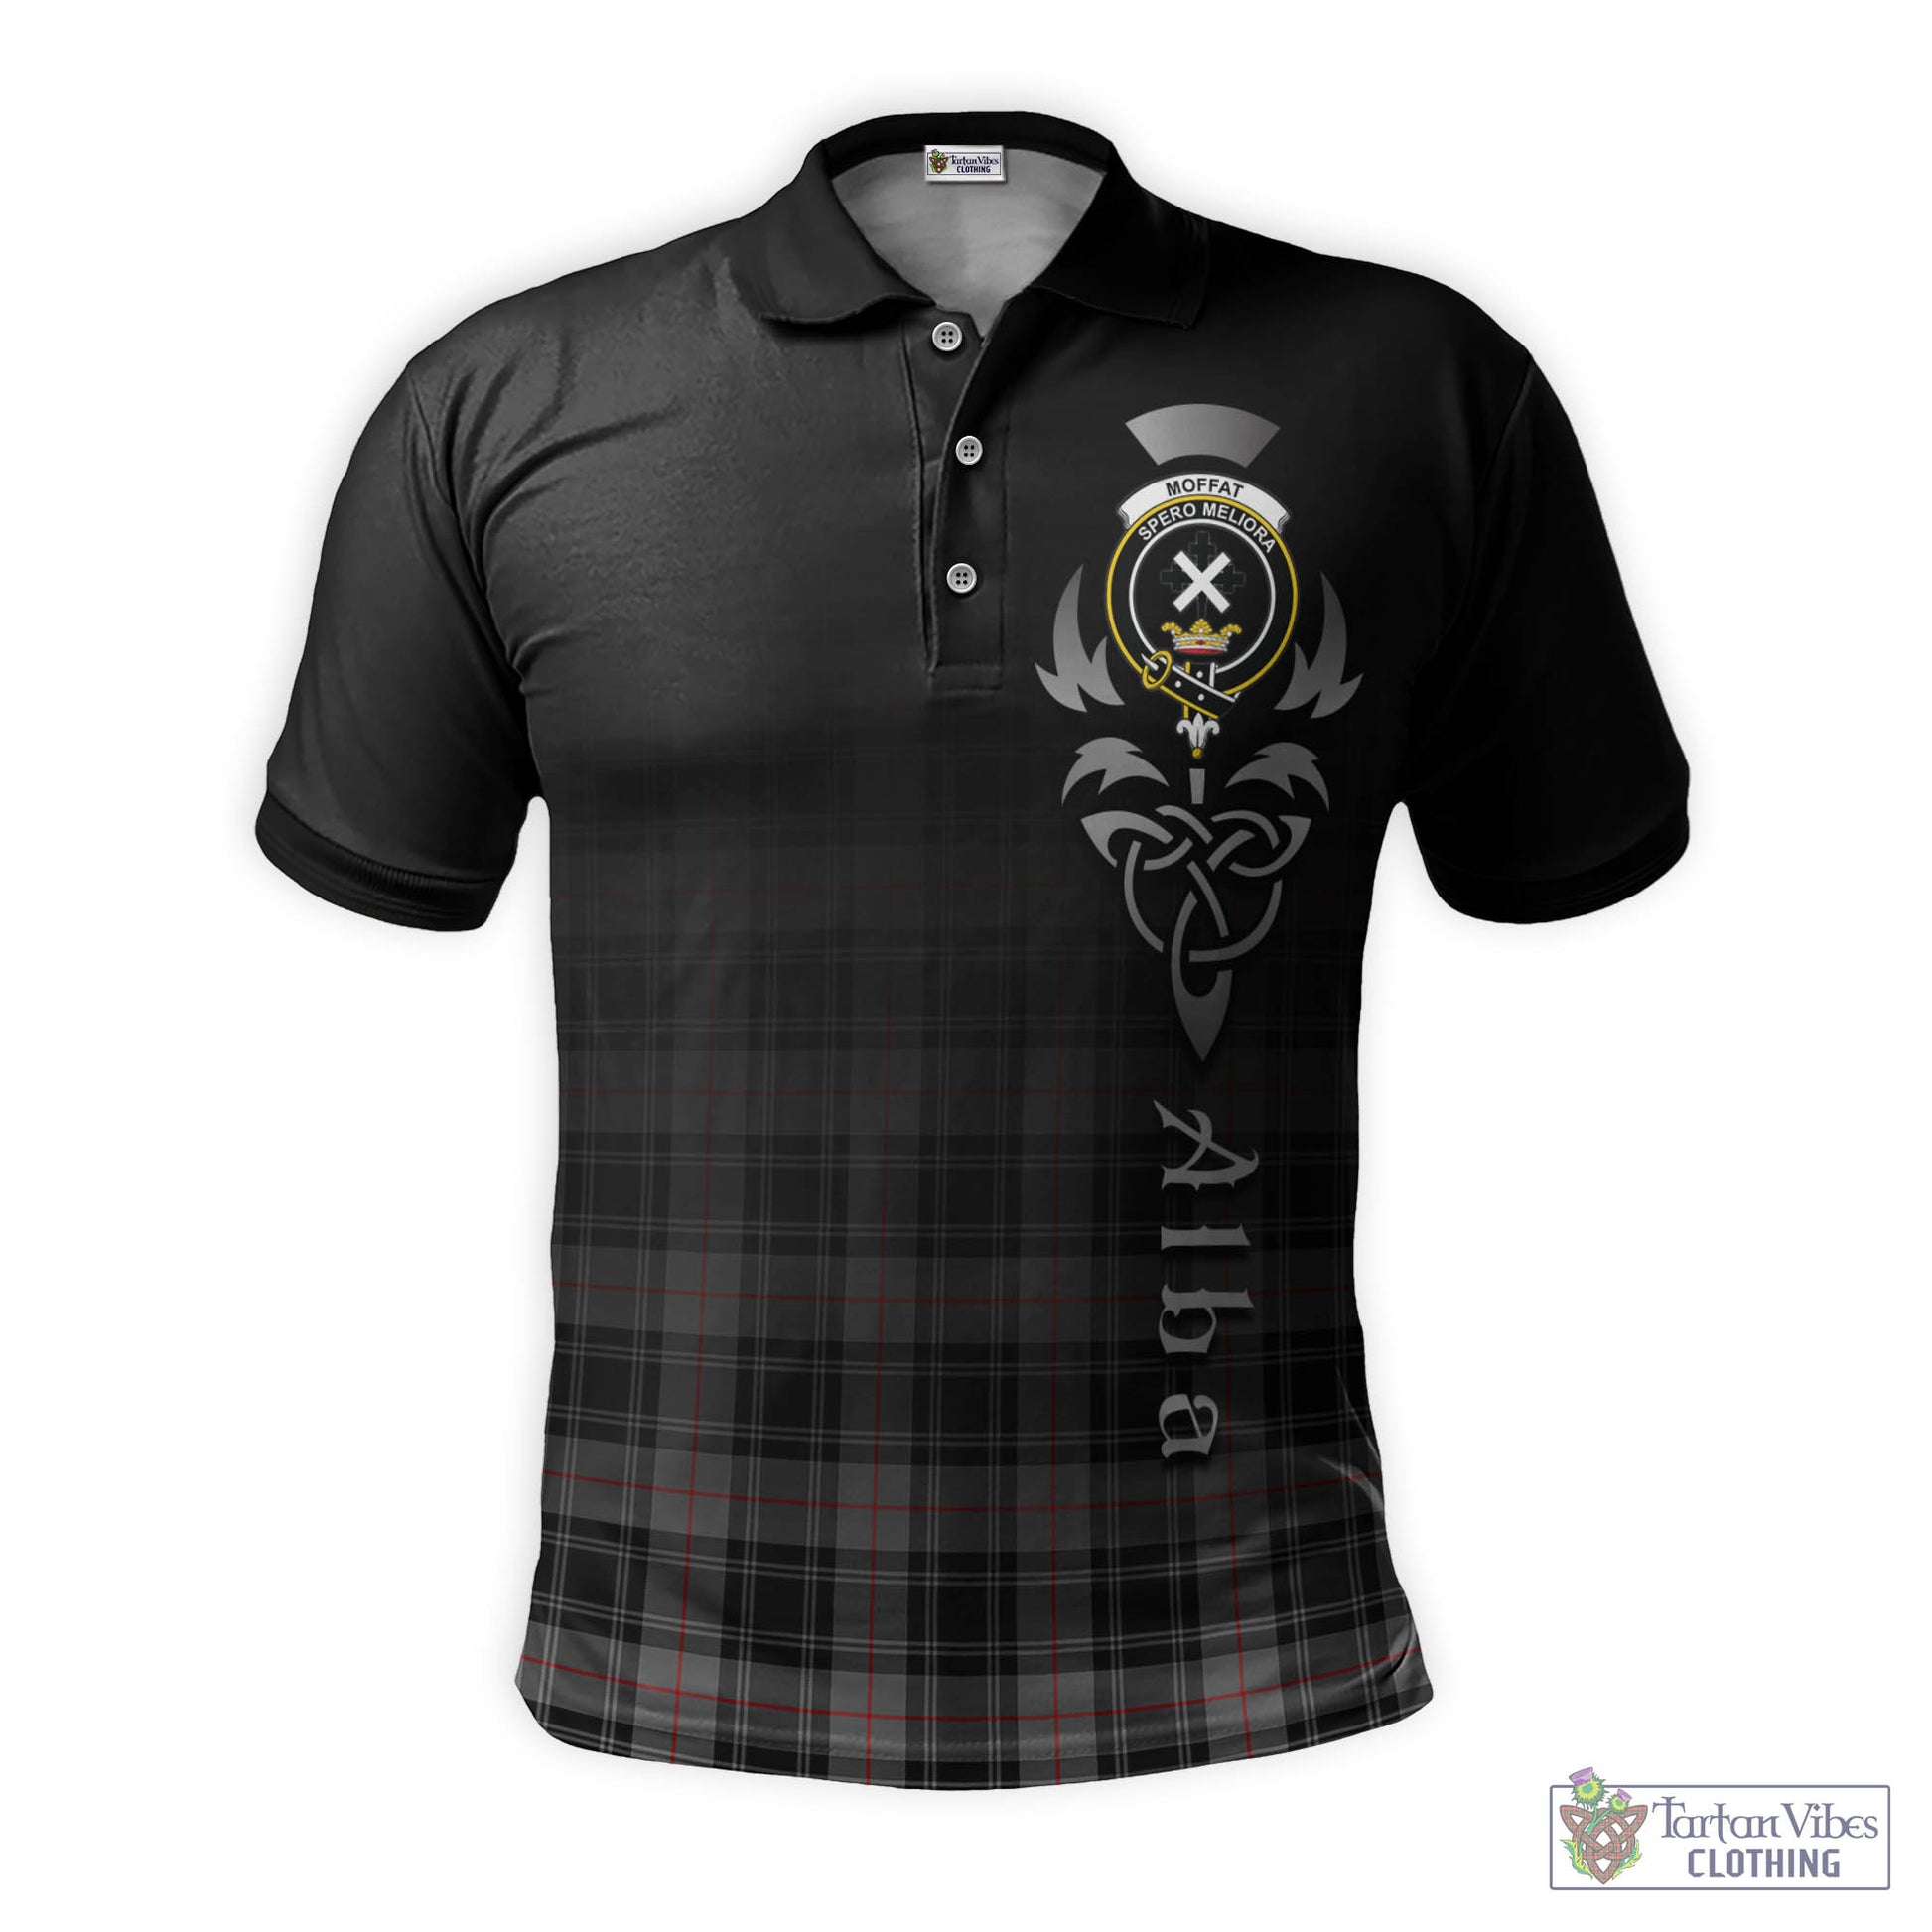 Tartan Vibes Clothing Moffat Modern Tartan Polo Shirt Featuring Alba Gu Brath Family Crest Celtic Inspired